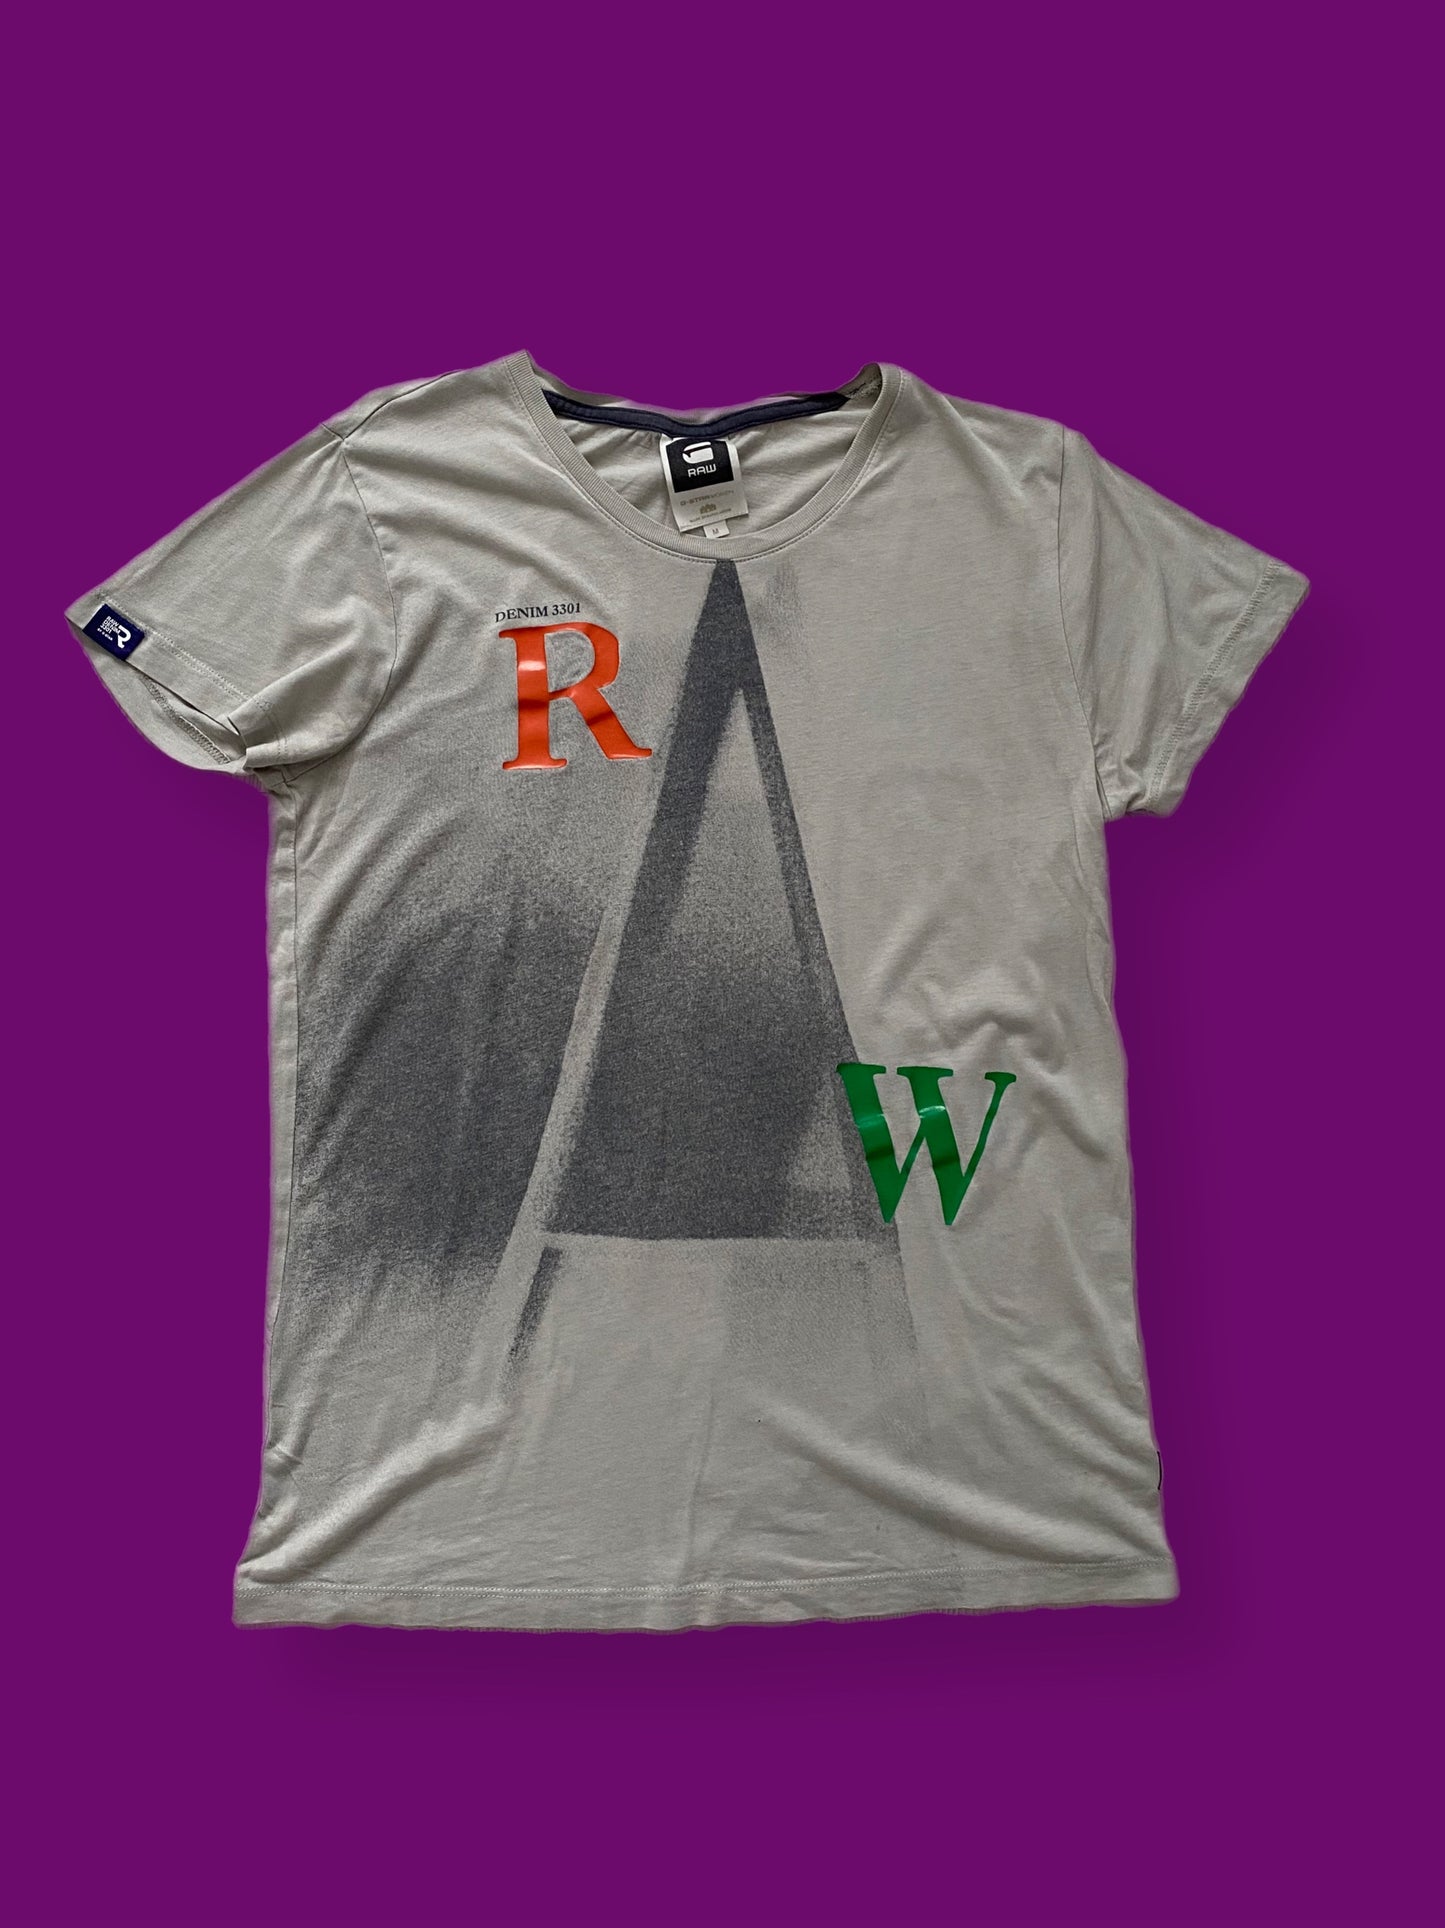 G-Star RAW T-Shirt